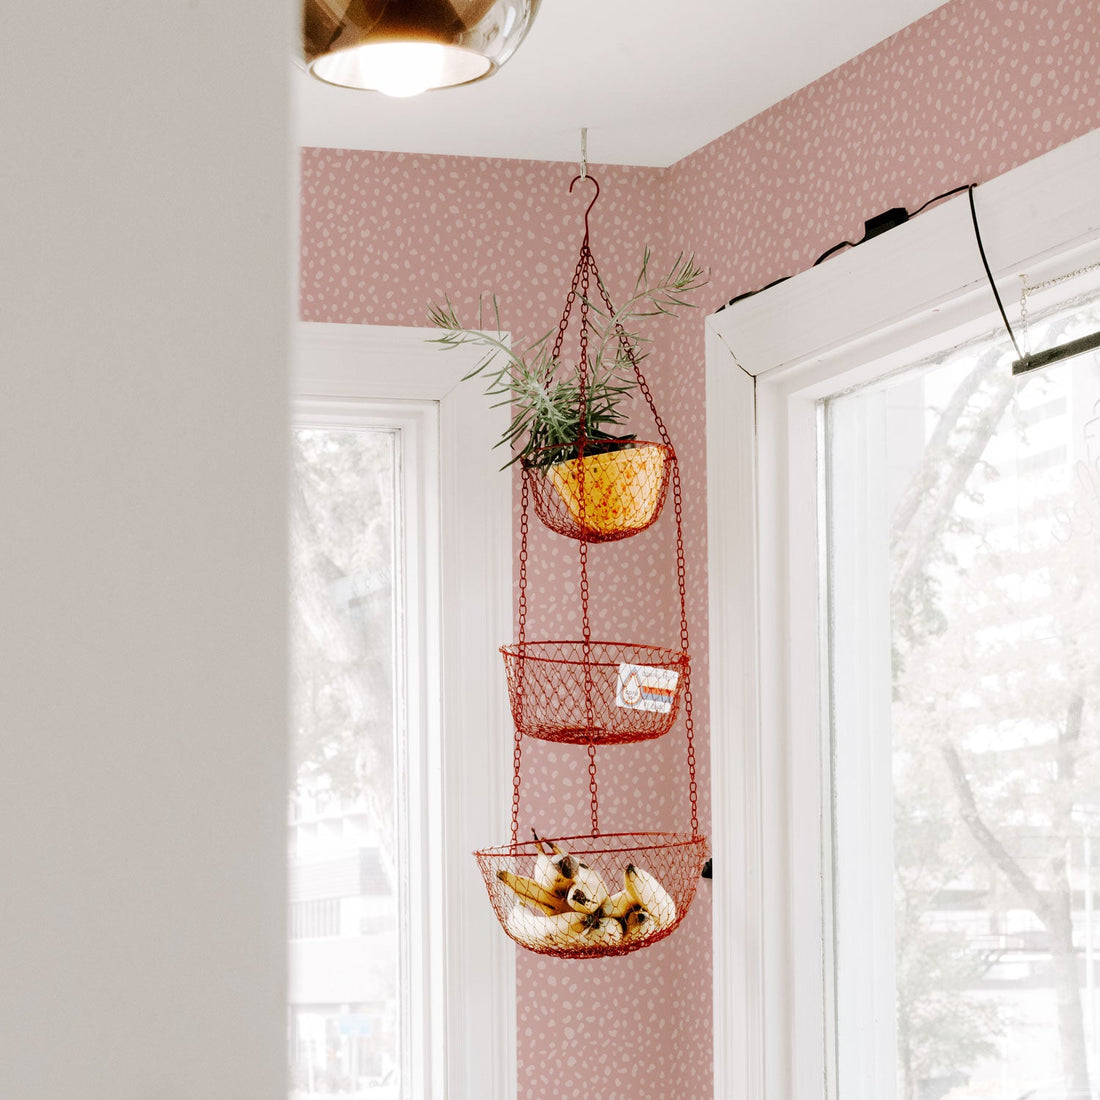 Pale pink dalmatian print removable wallpaper in white kitchen interior